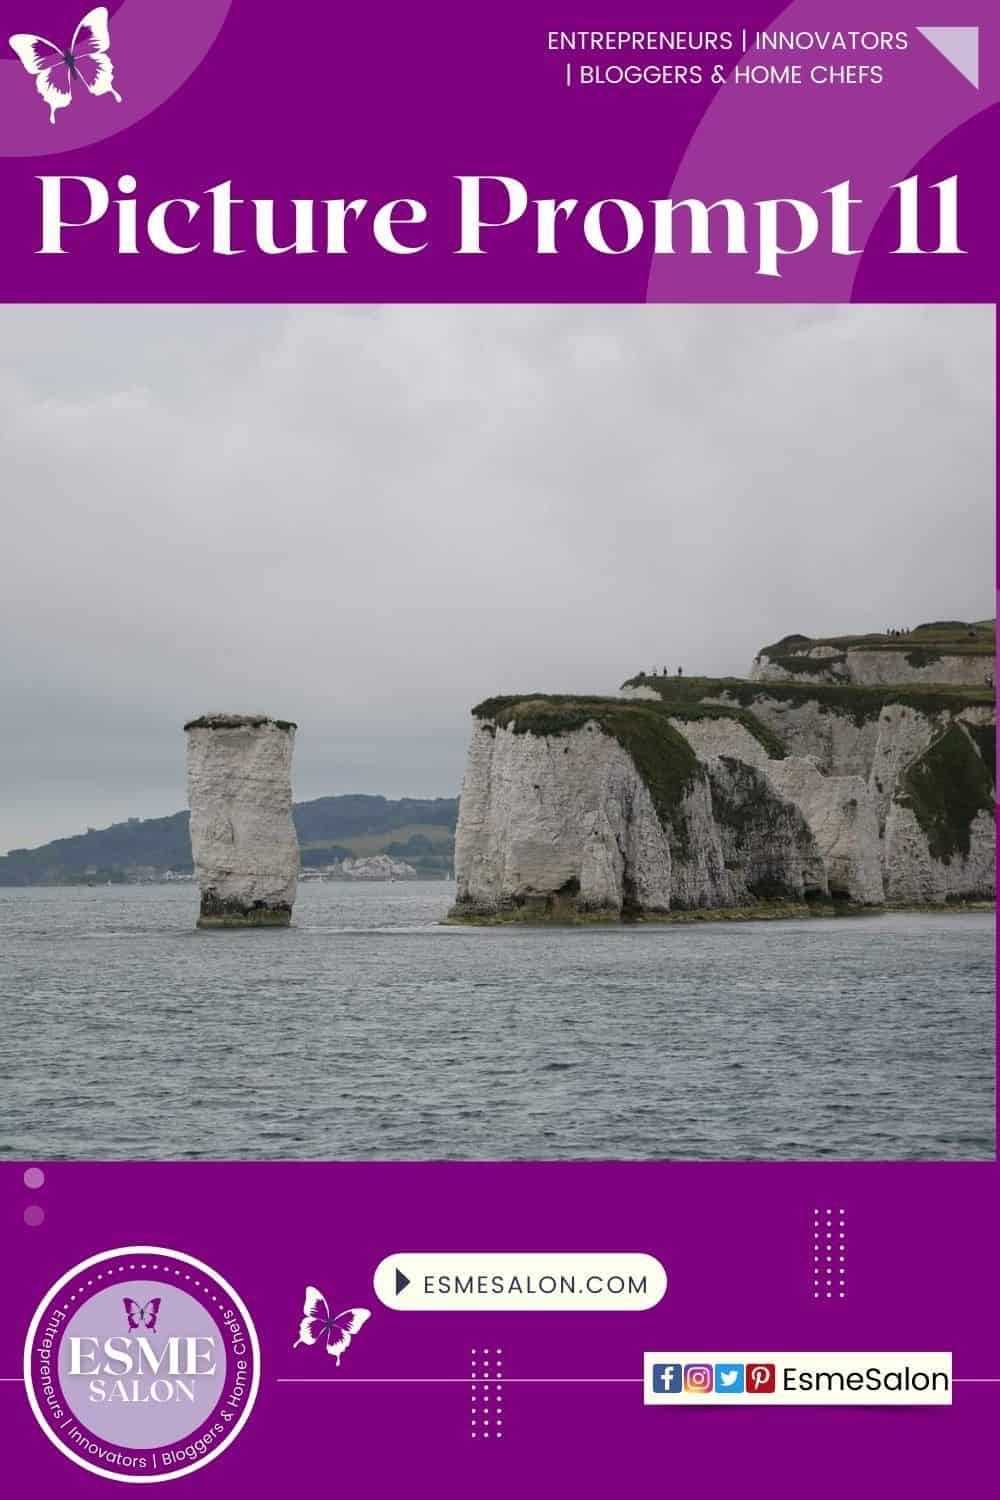 an image of Harry's Rocks off the Dorset coast